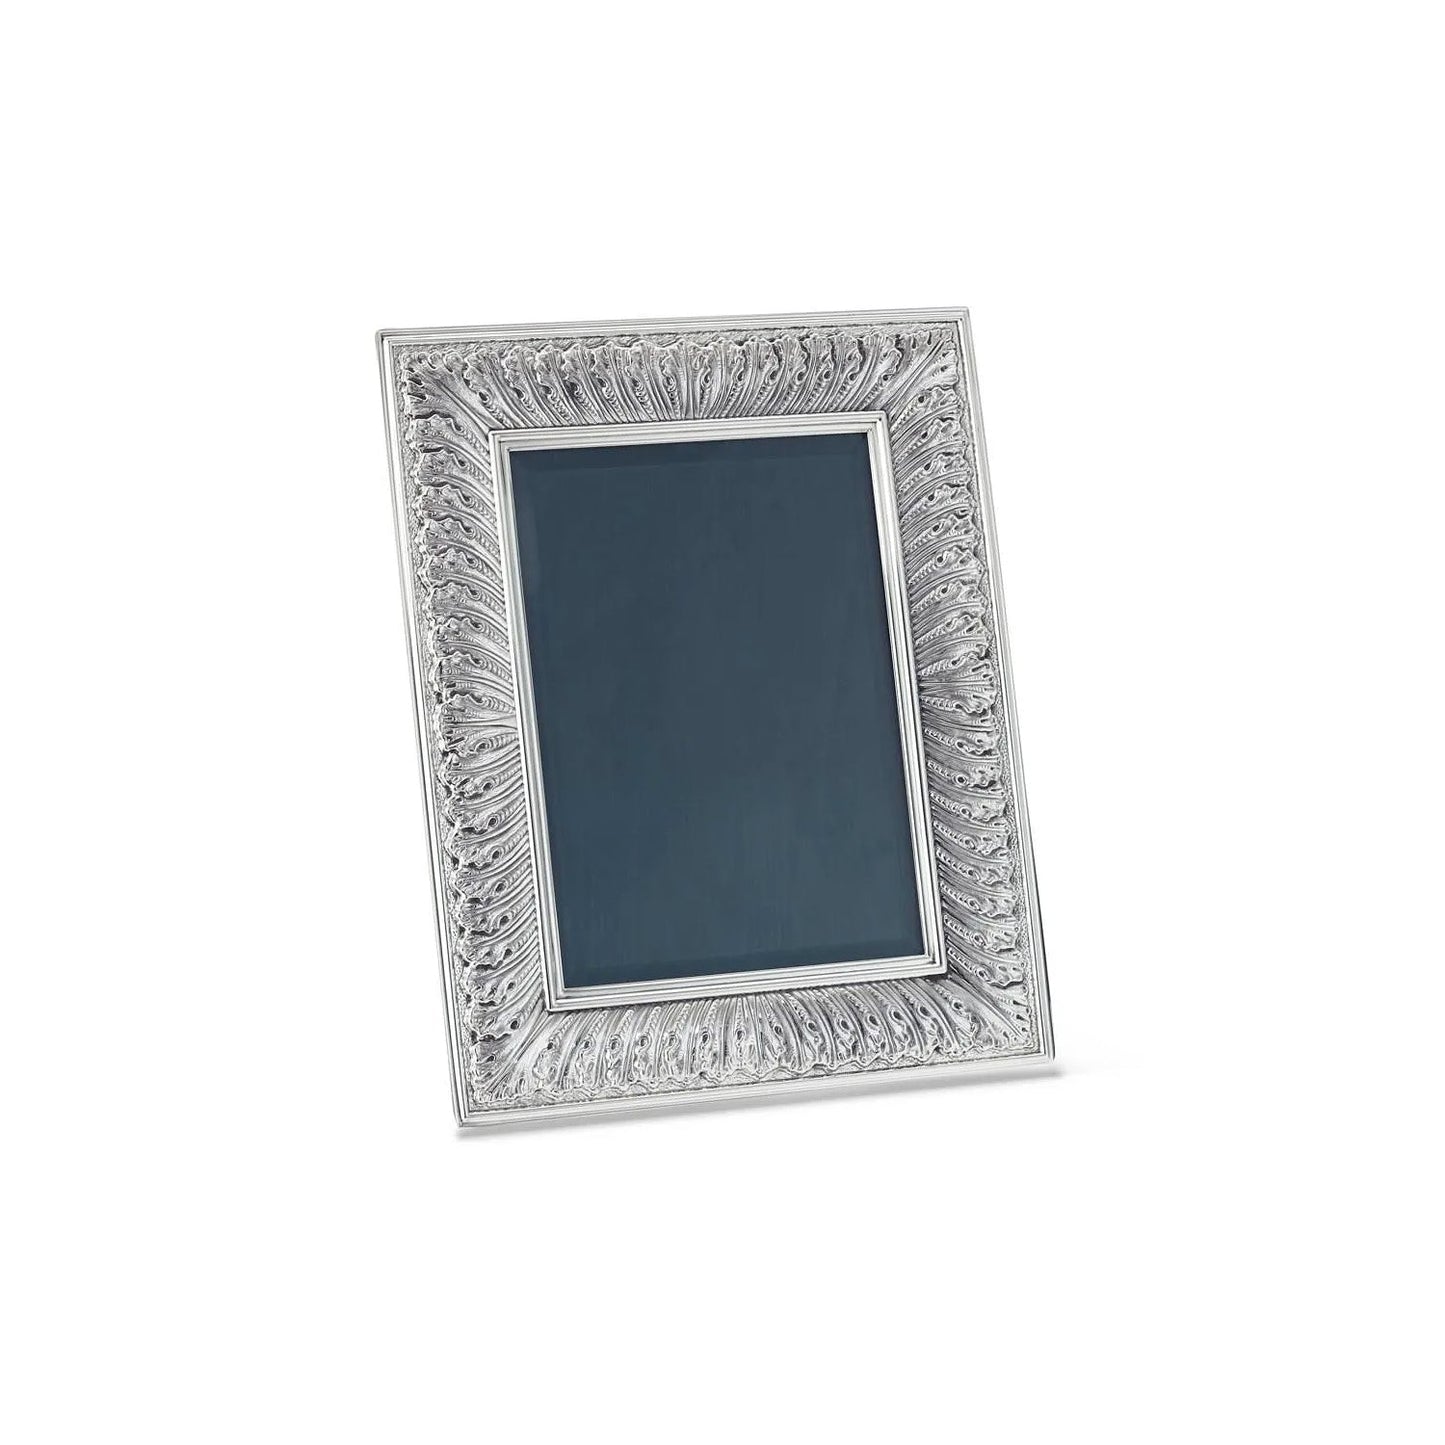 Buccellati - Small Silver Linenfold Frame (2 x 3")